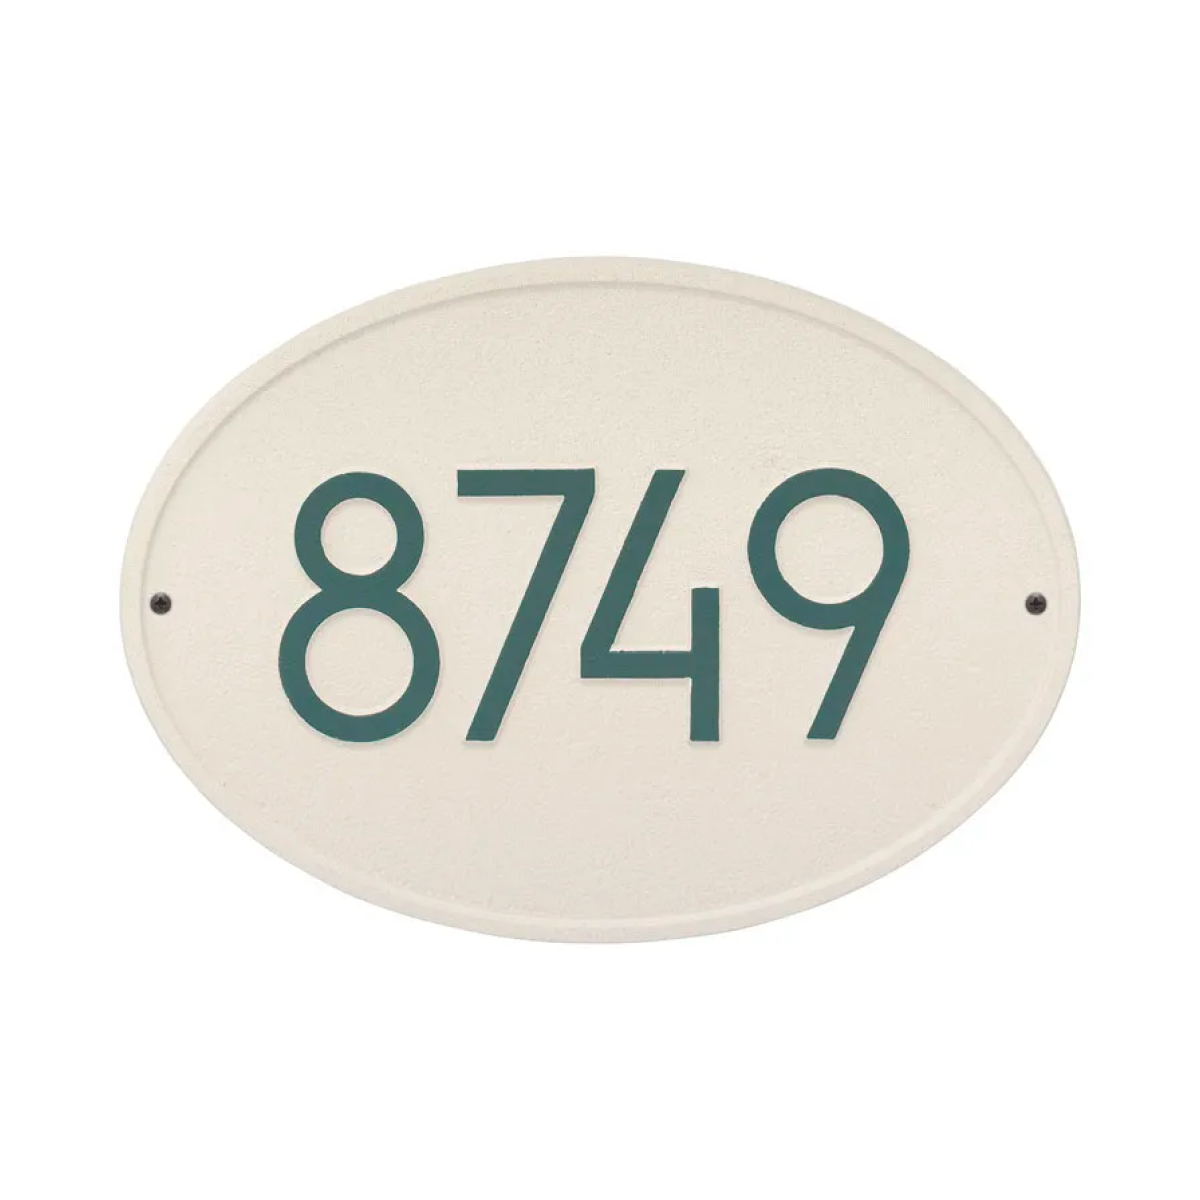 Whitehall Hawthorne Oval Modern Address Plaque Featured Image